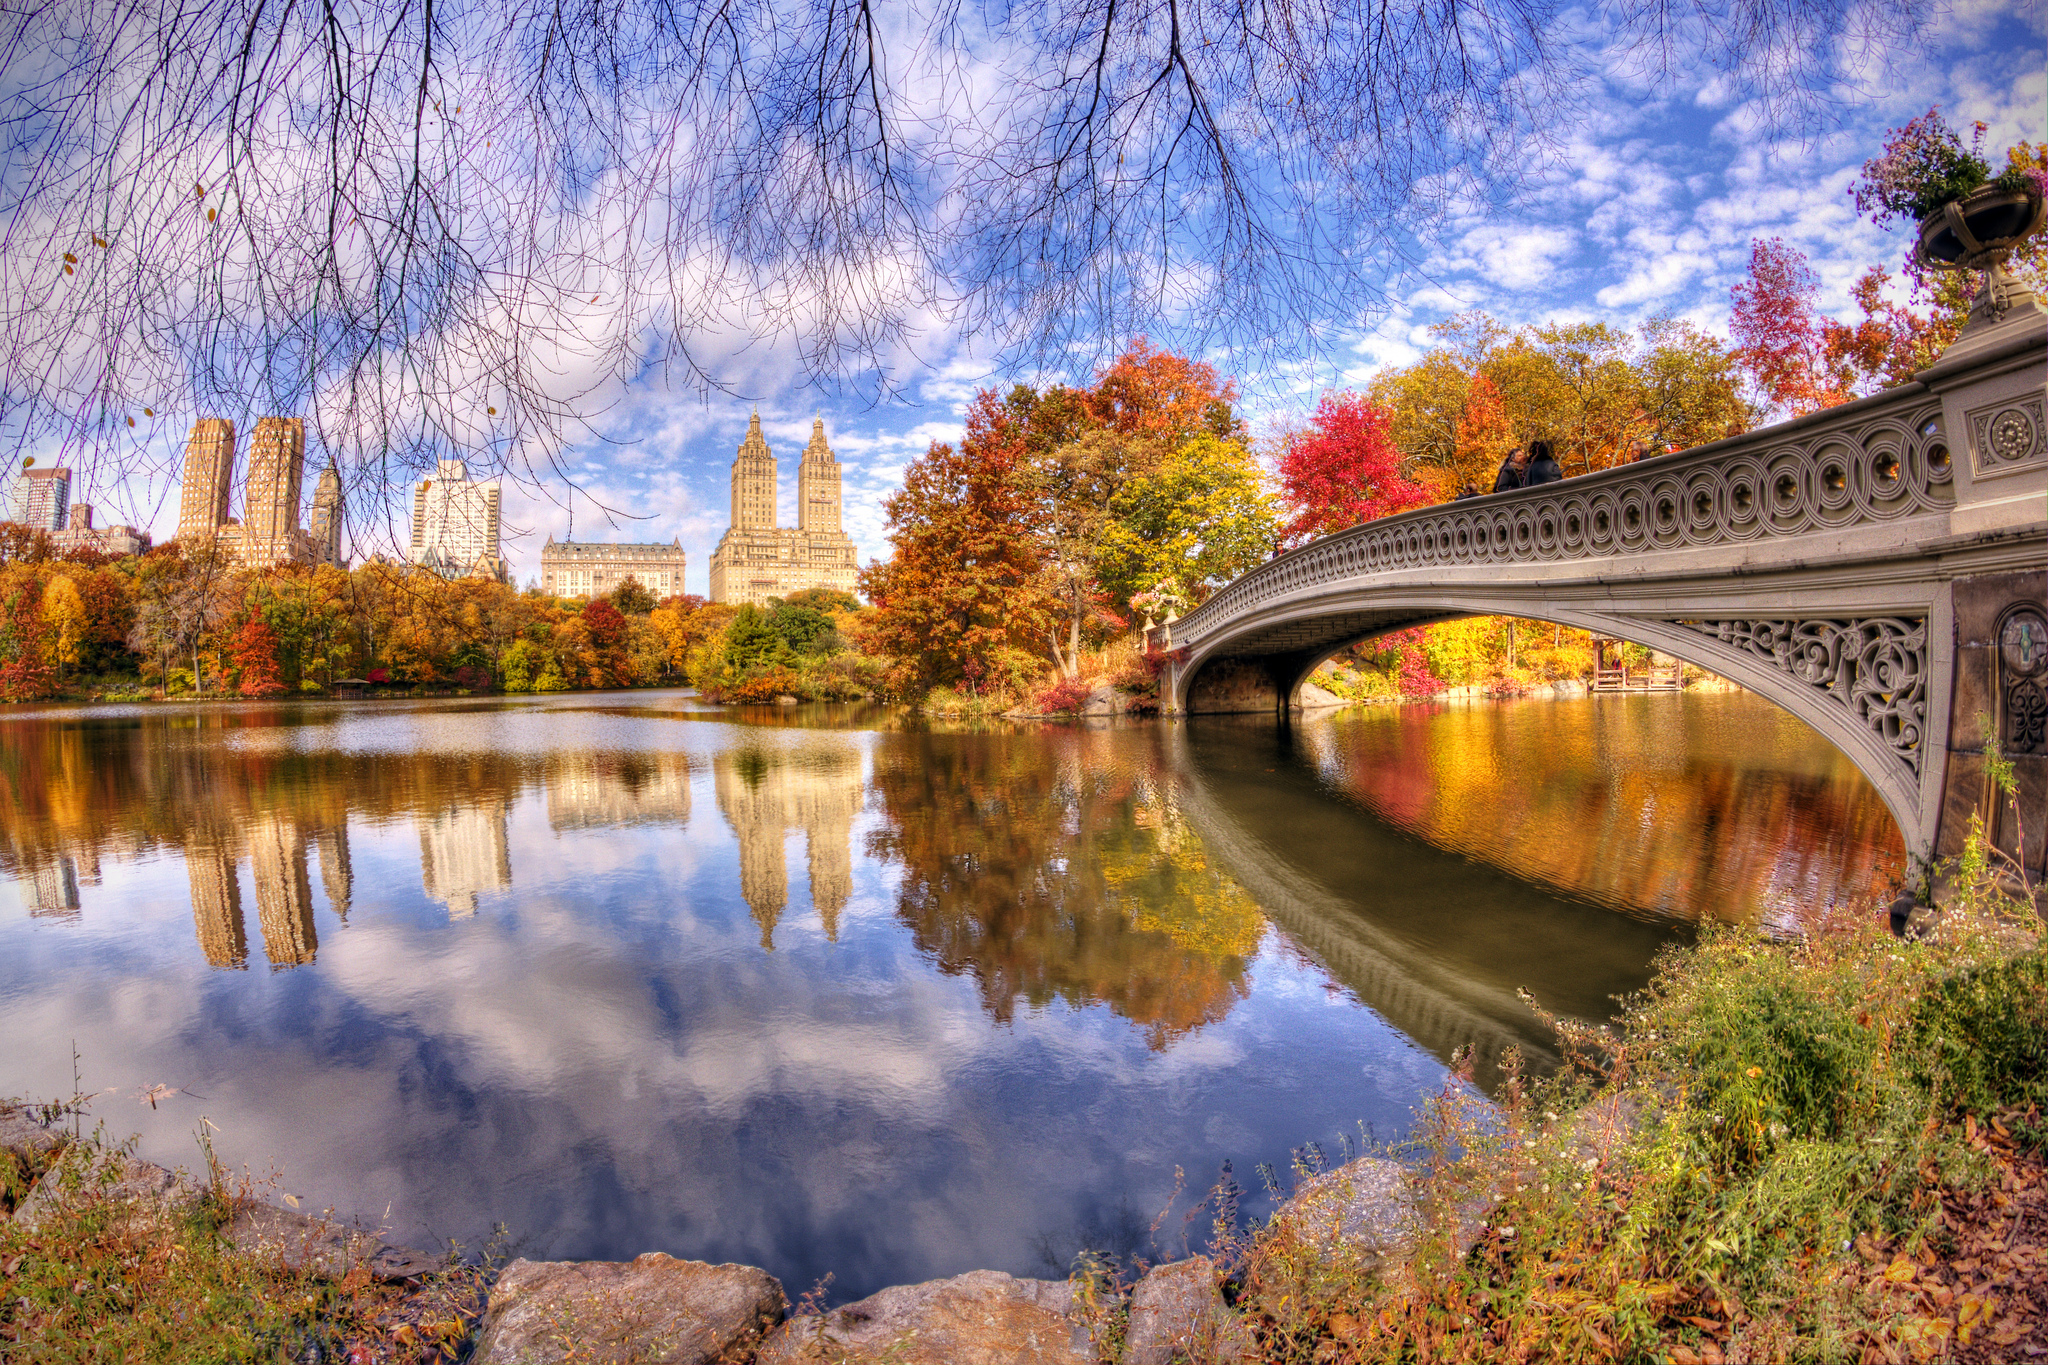 New York's Central Park in Autumn by Daniel Portalatin